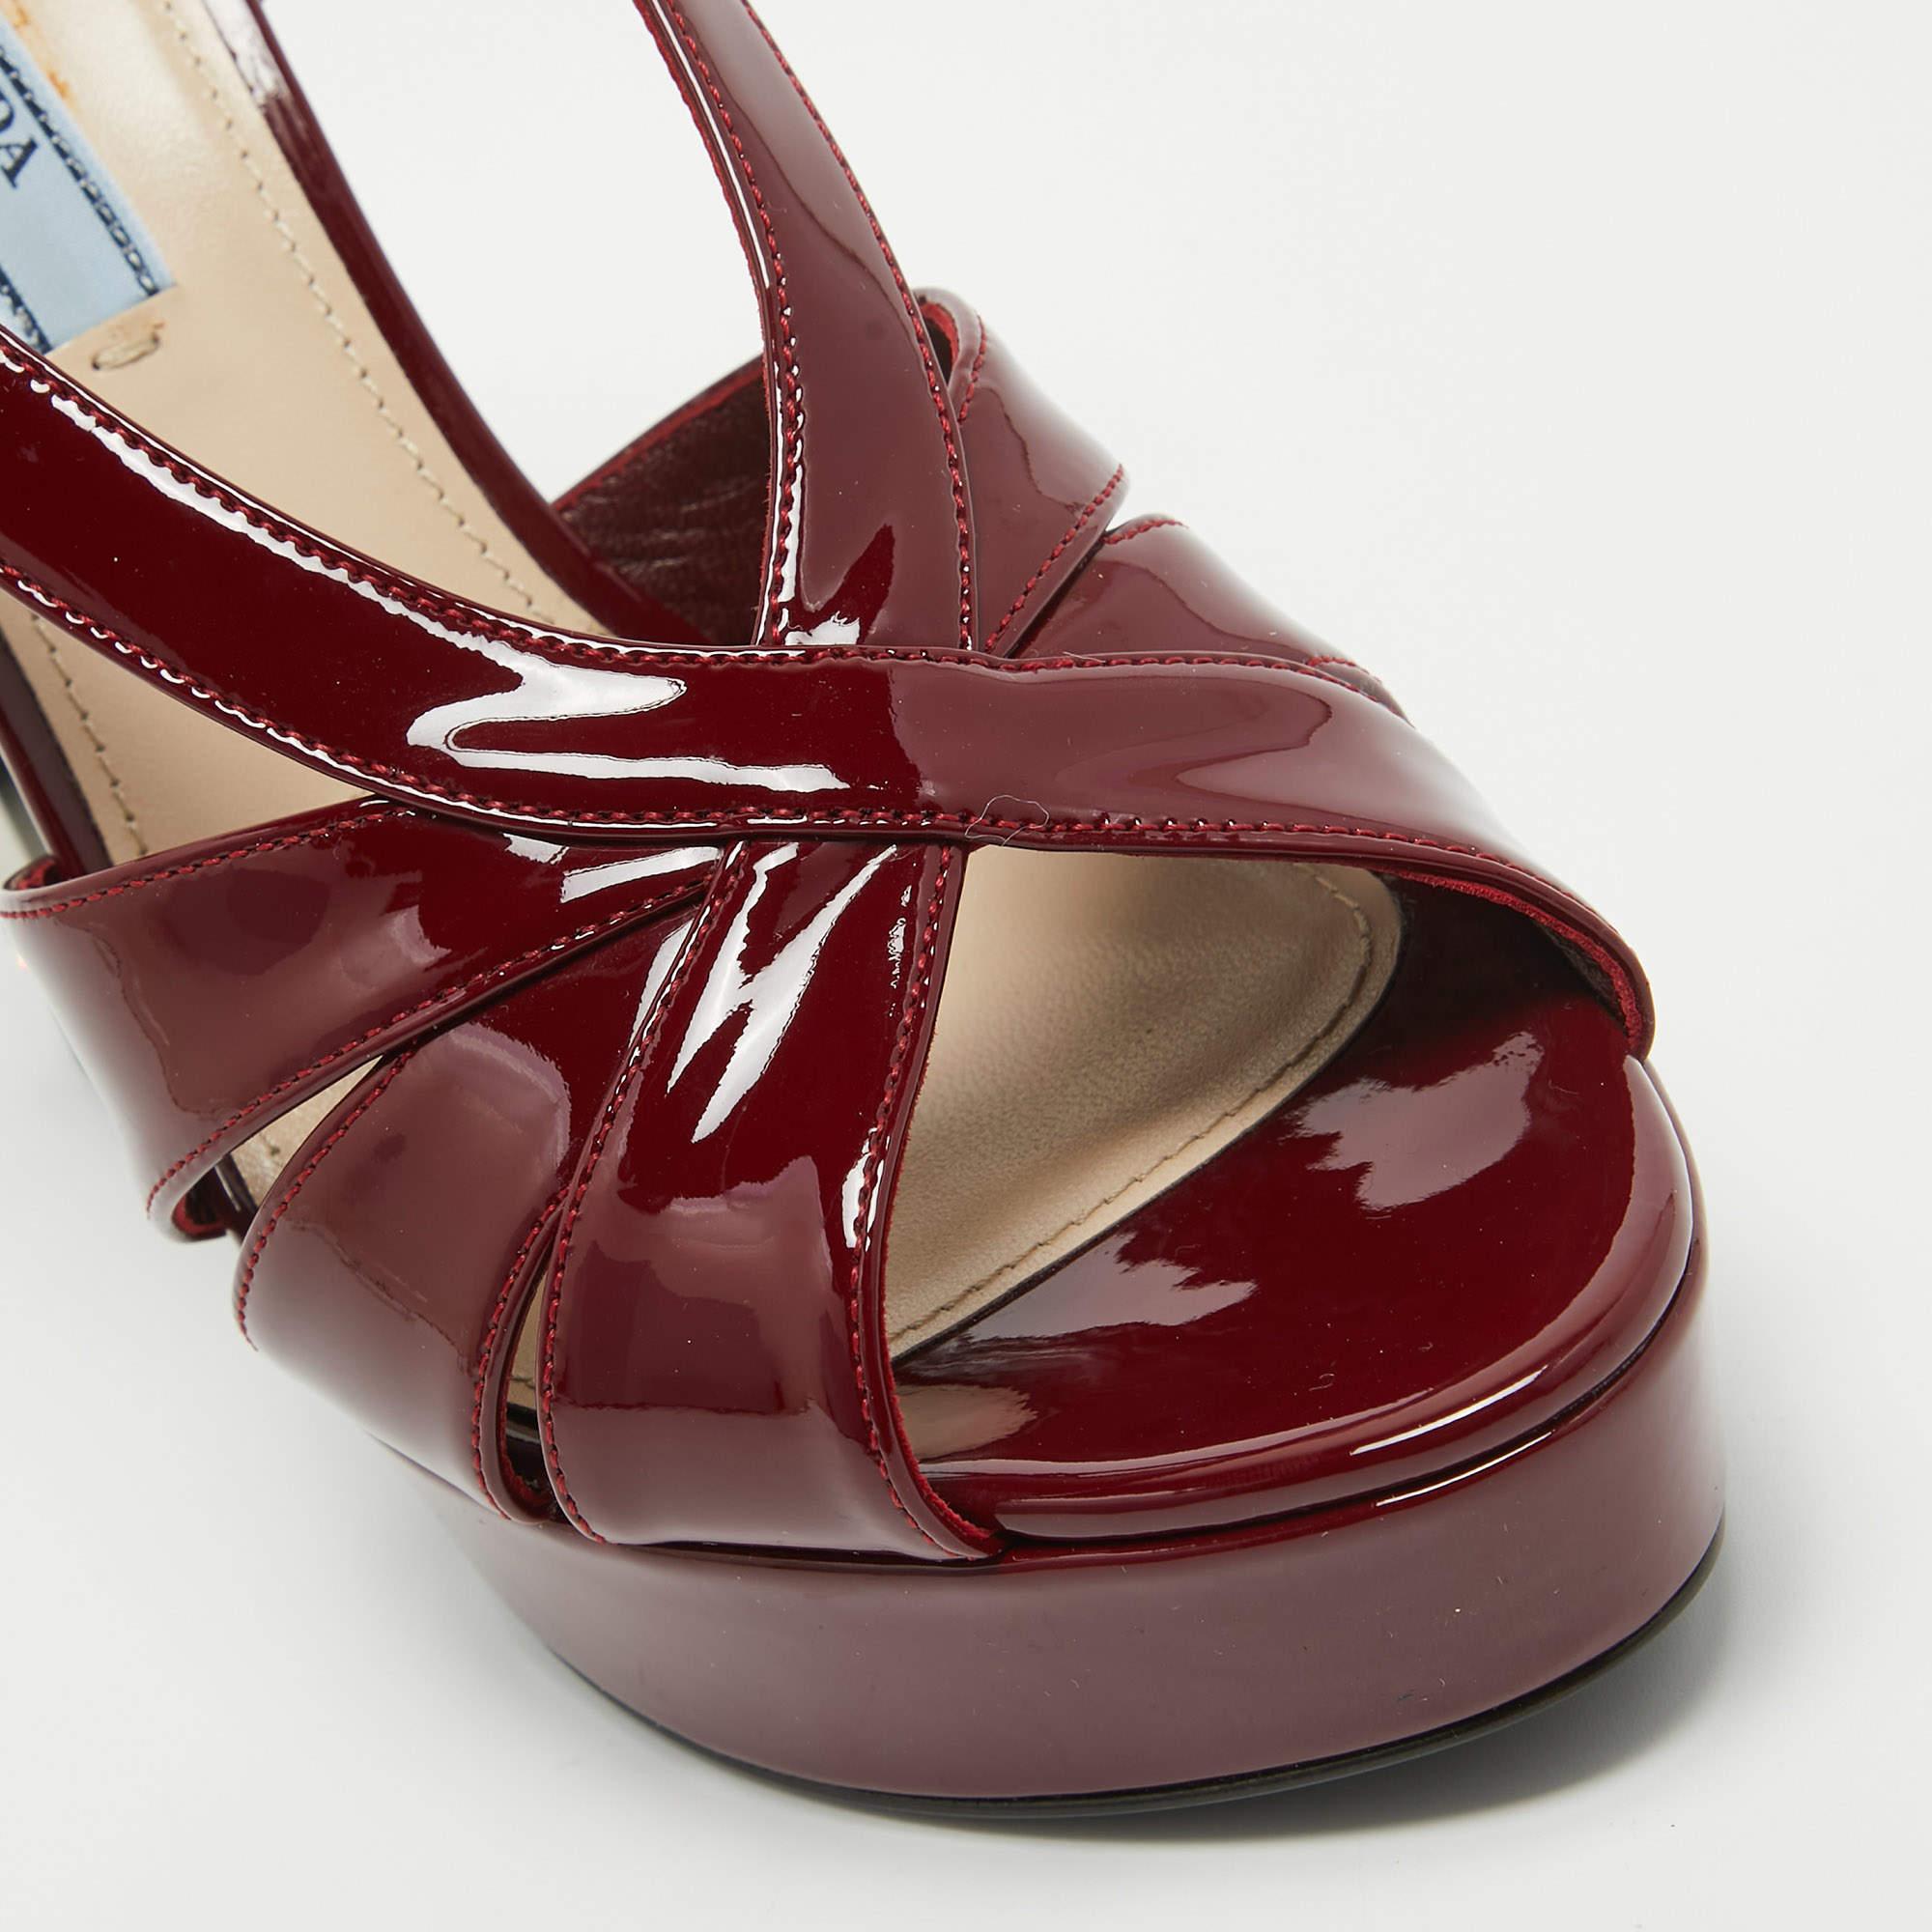 Prada Burgundy Patent Leather Strappy Platform Sandals Size 38 1